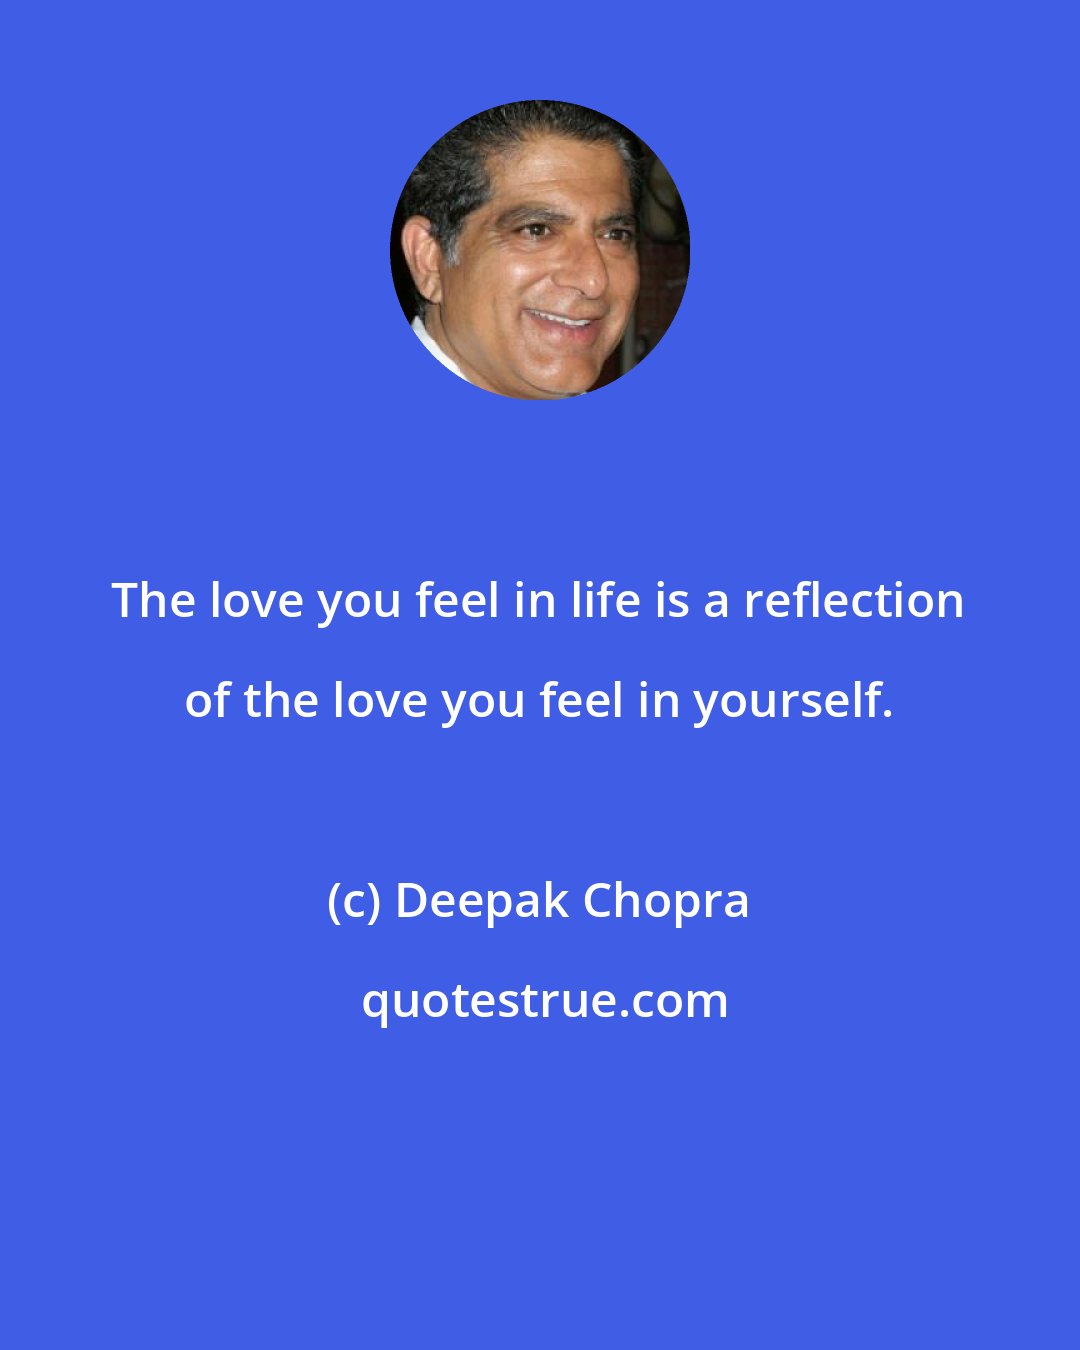 Deepak Chopra: The love you feel in life is a reflection of the love you feel in yourself.